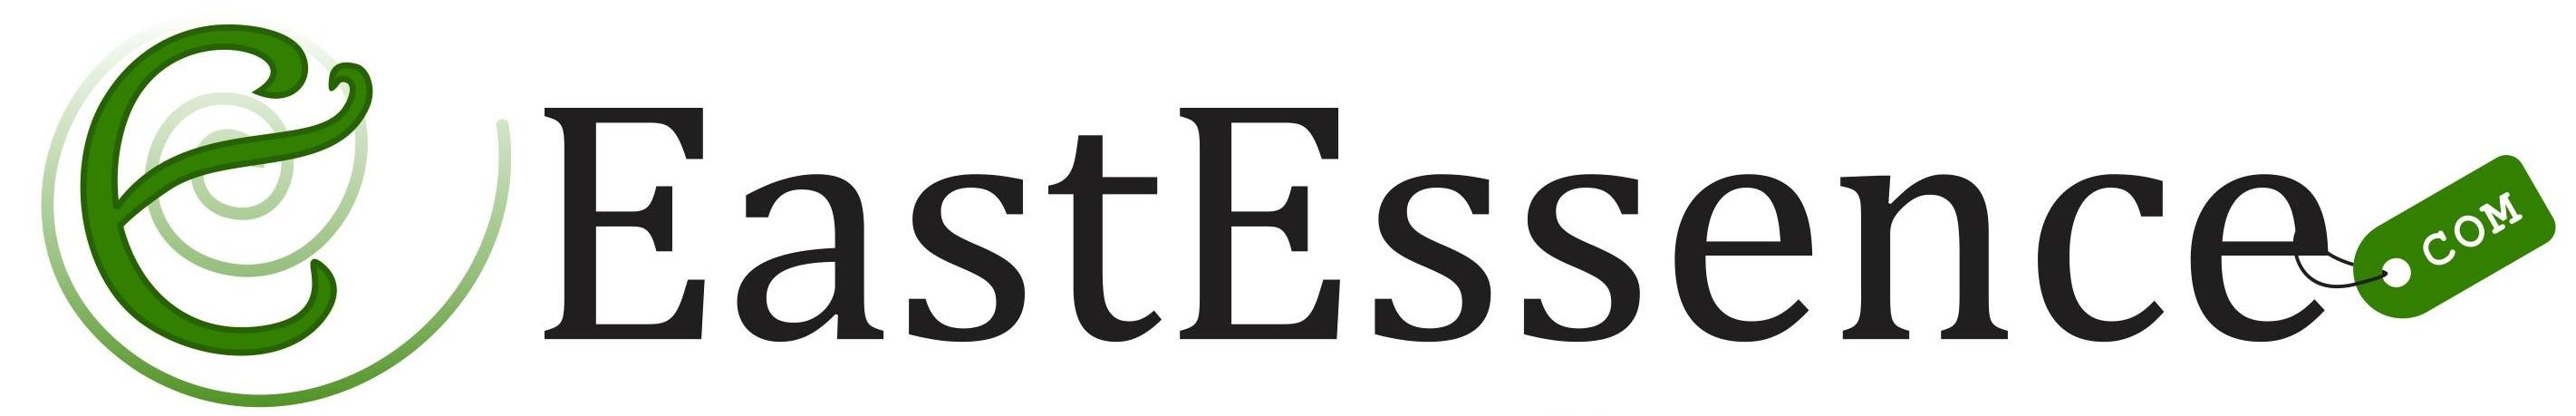 Company logo of Eastessence